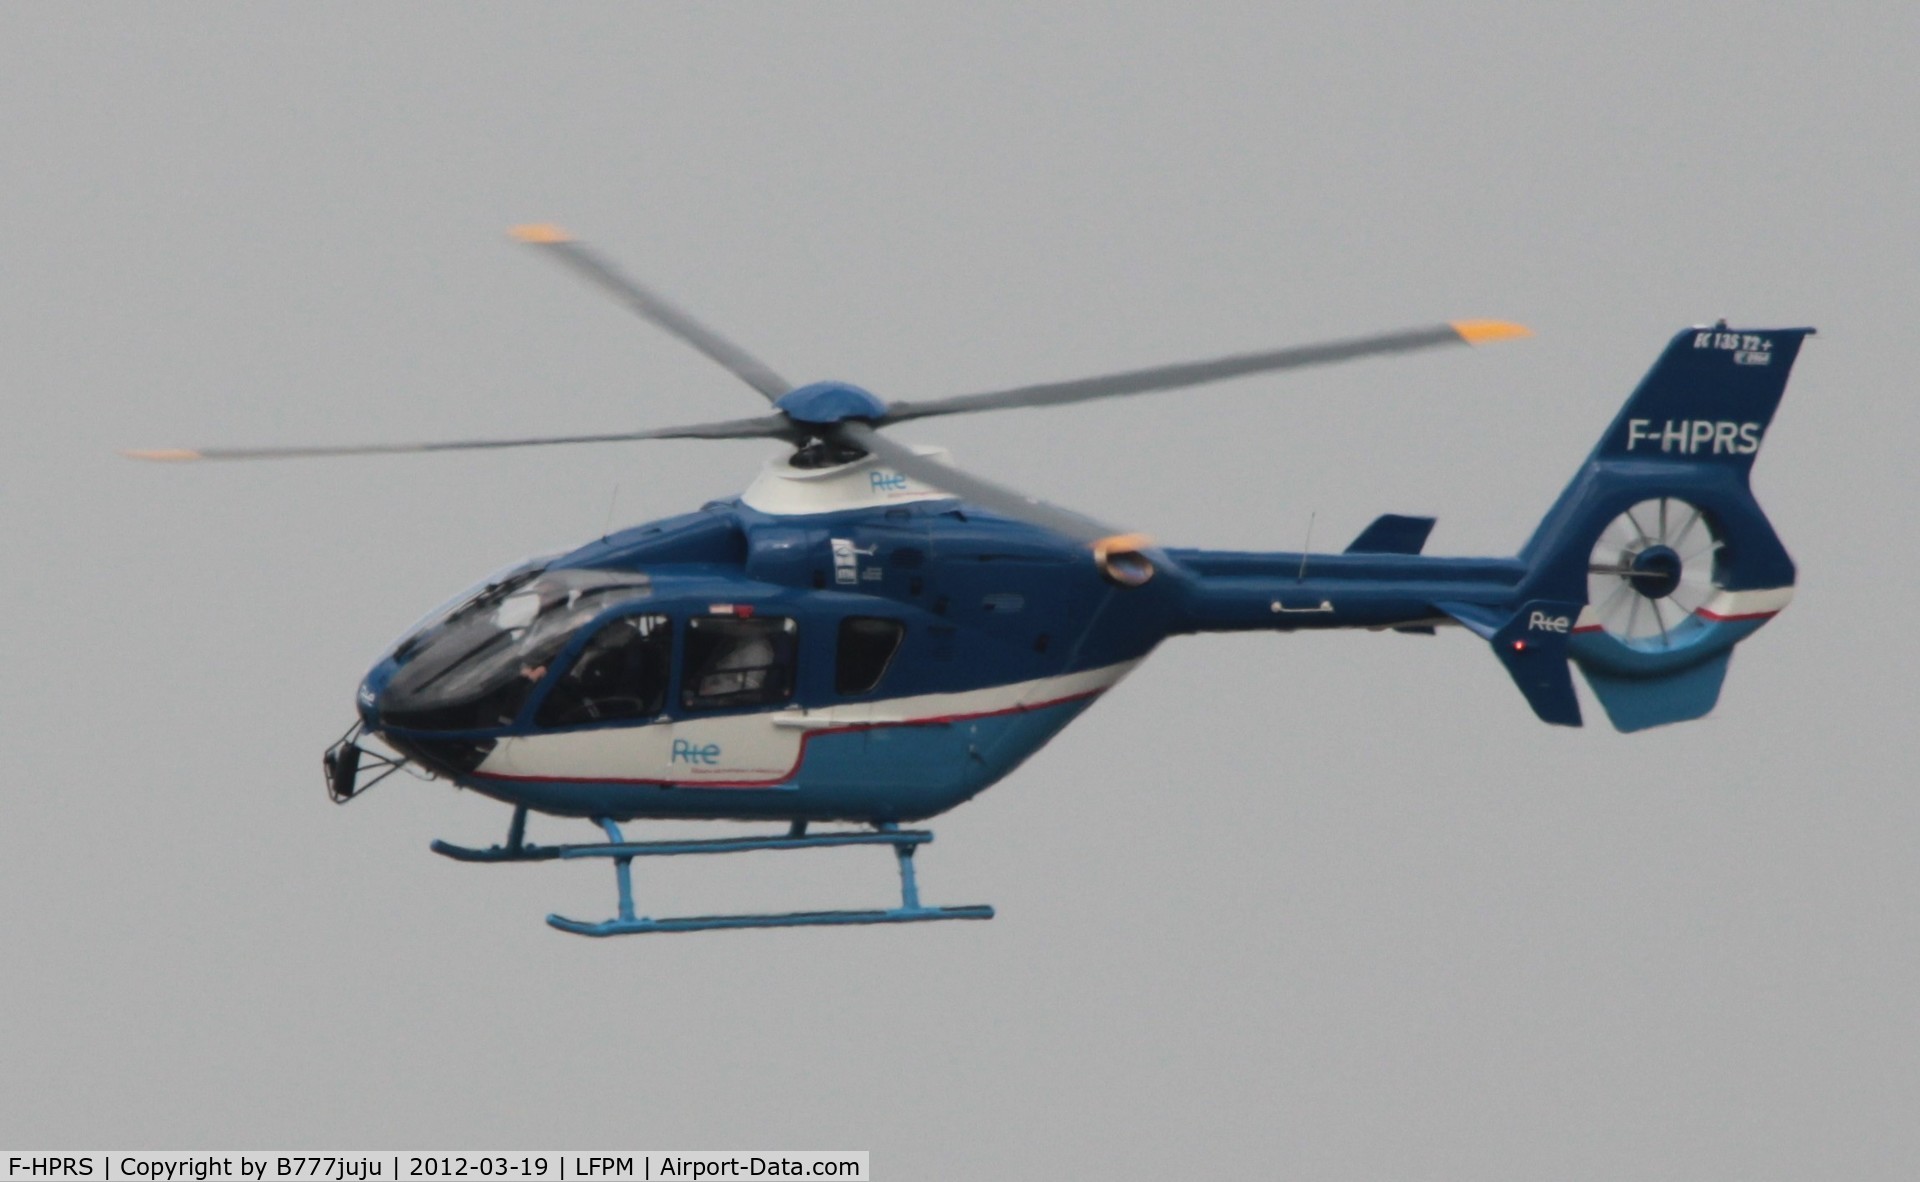 F-HPRS, 2010 Eurocopter EC-135T-2+ C/N 0964, on transit at Melun